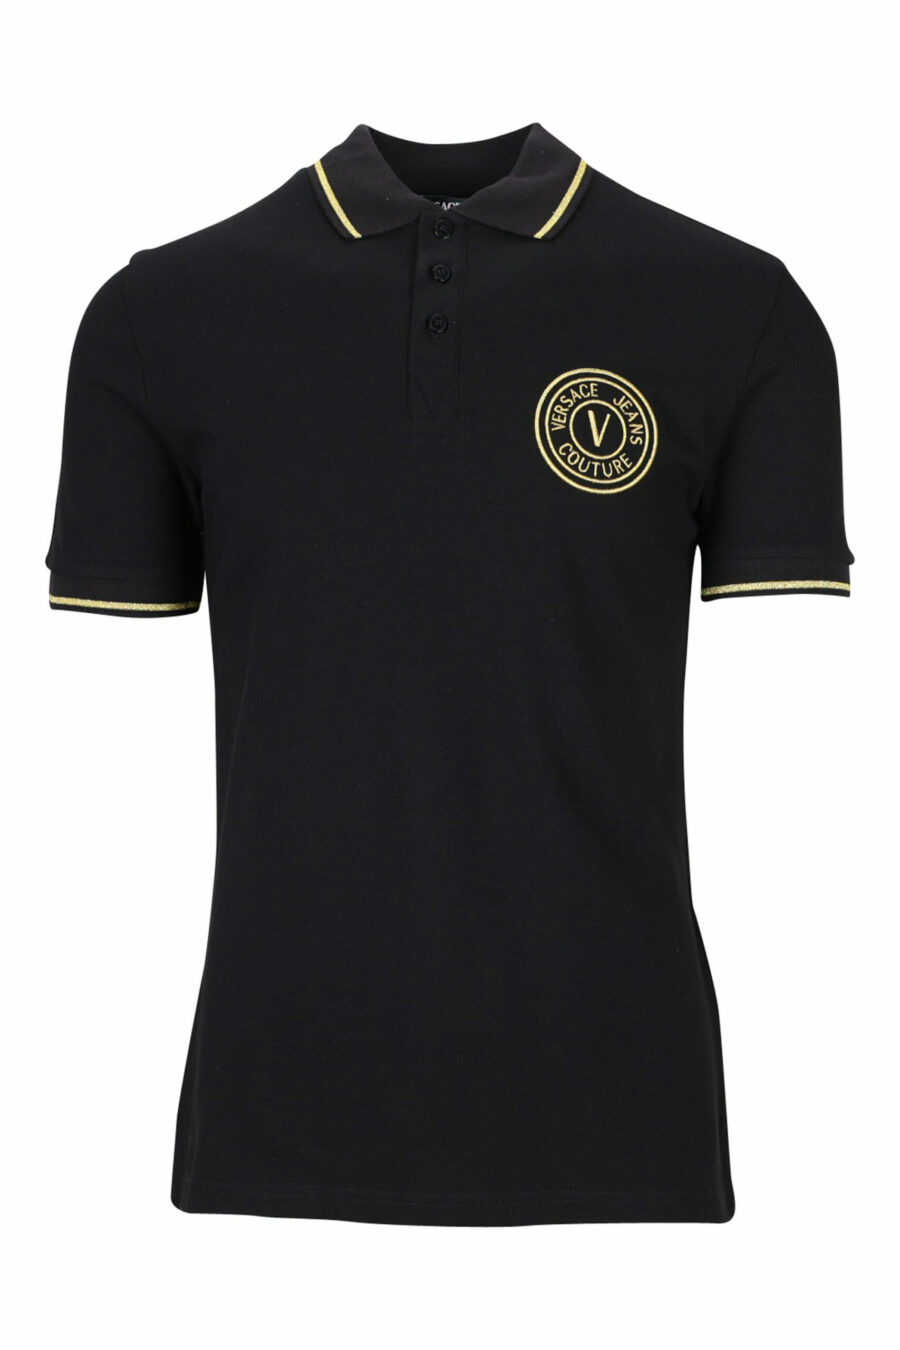 Schwarzes Poloshirt mit goldenem Mini-Logo - 8052019467598 skaliert